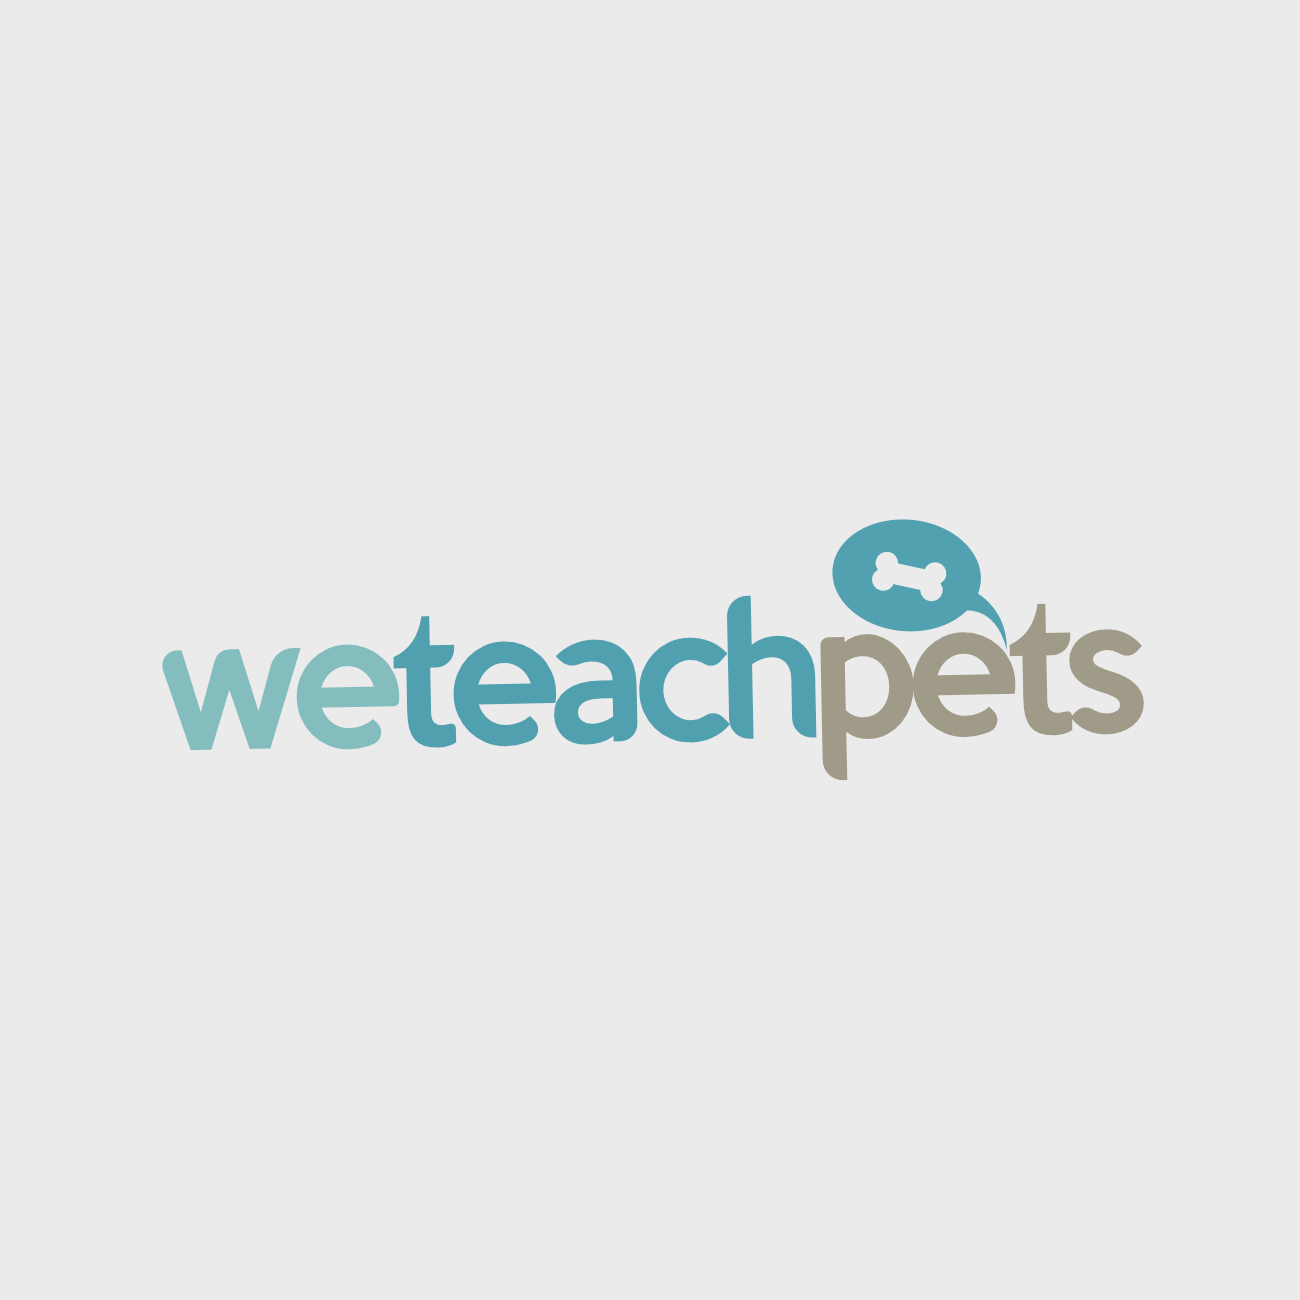 We Teach Pets logo for UK business